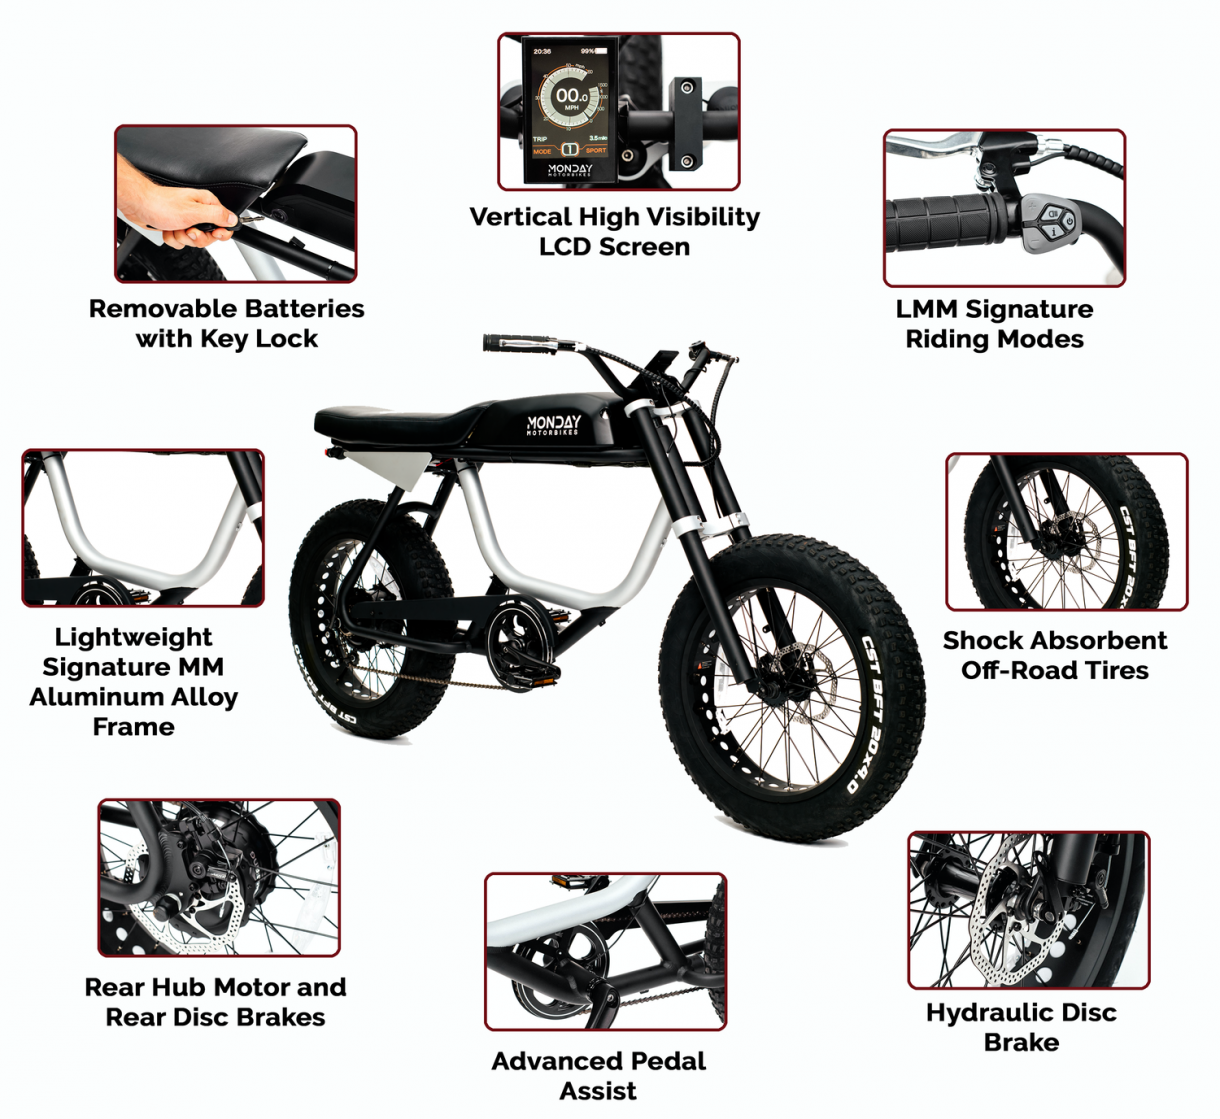 Monday Motorbikes Anza Features2